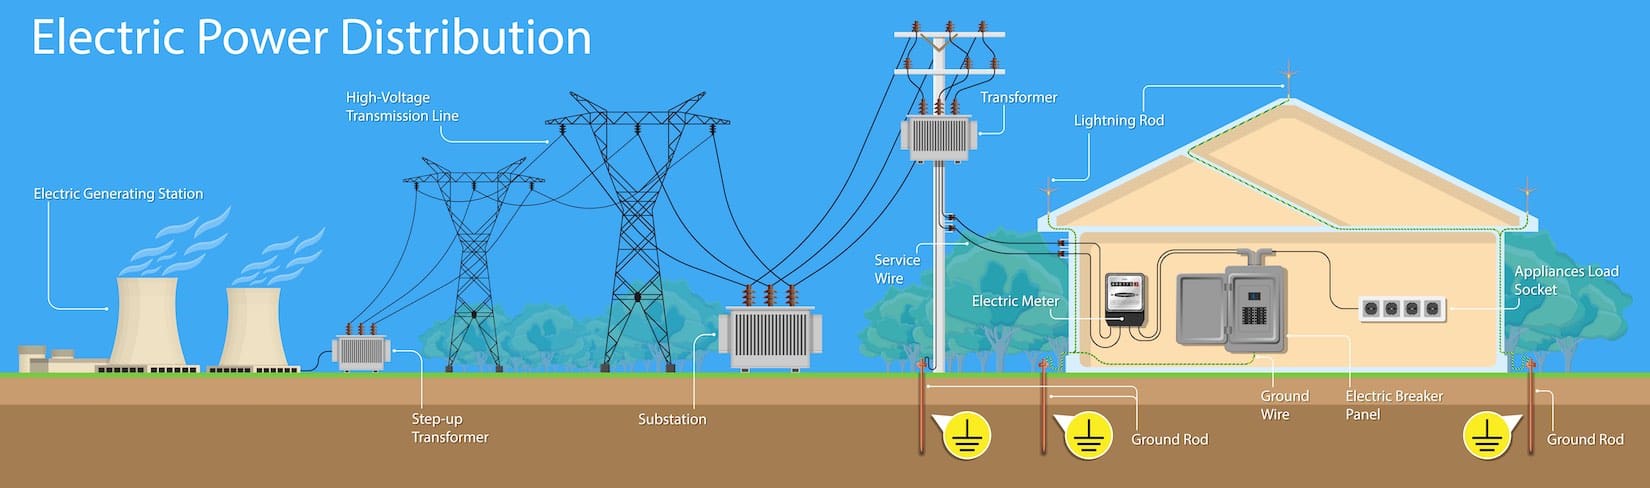 Power distribution infographic